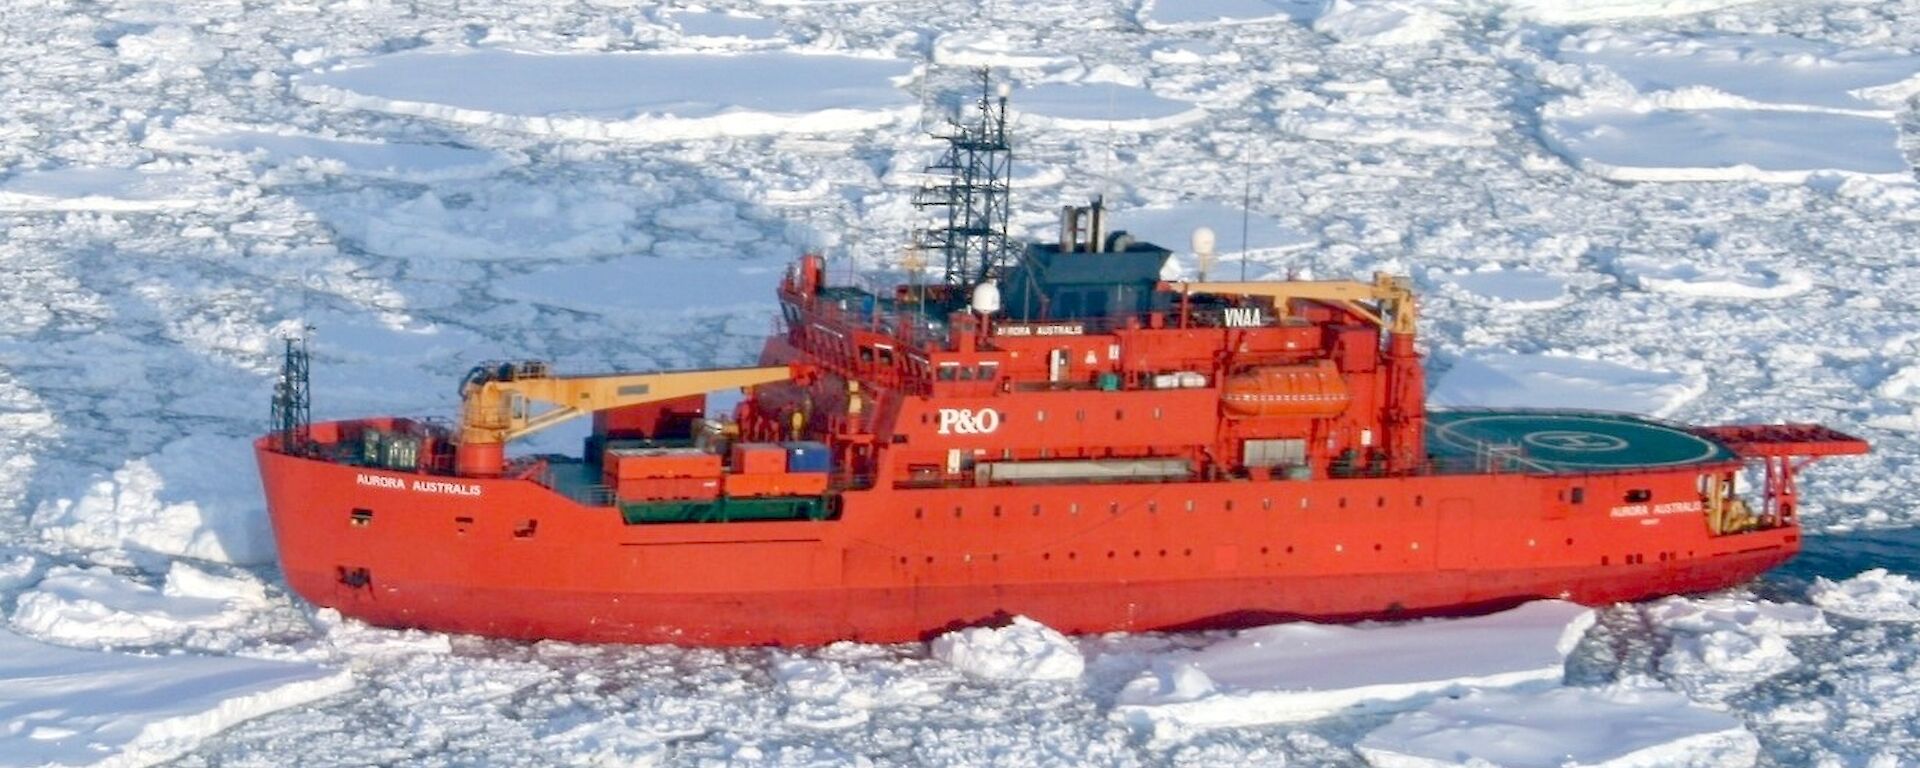 Aurora Australis ship coming into heavy sea ice